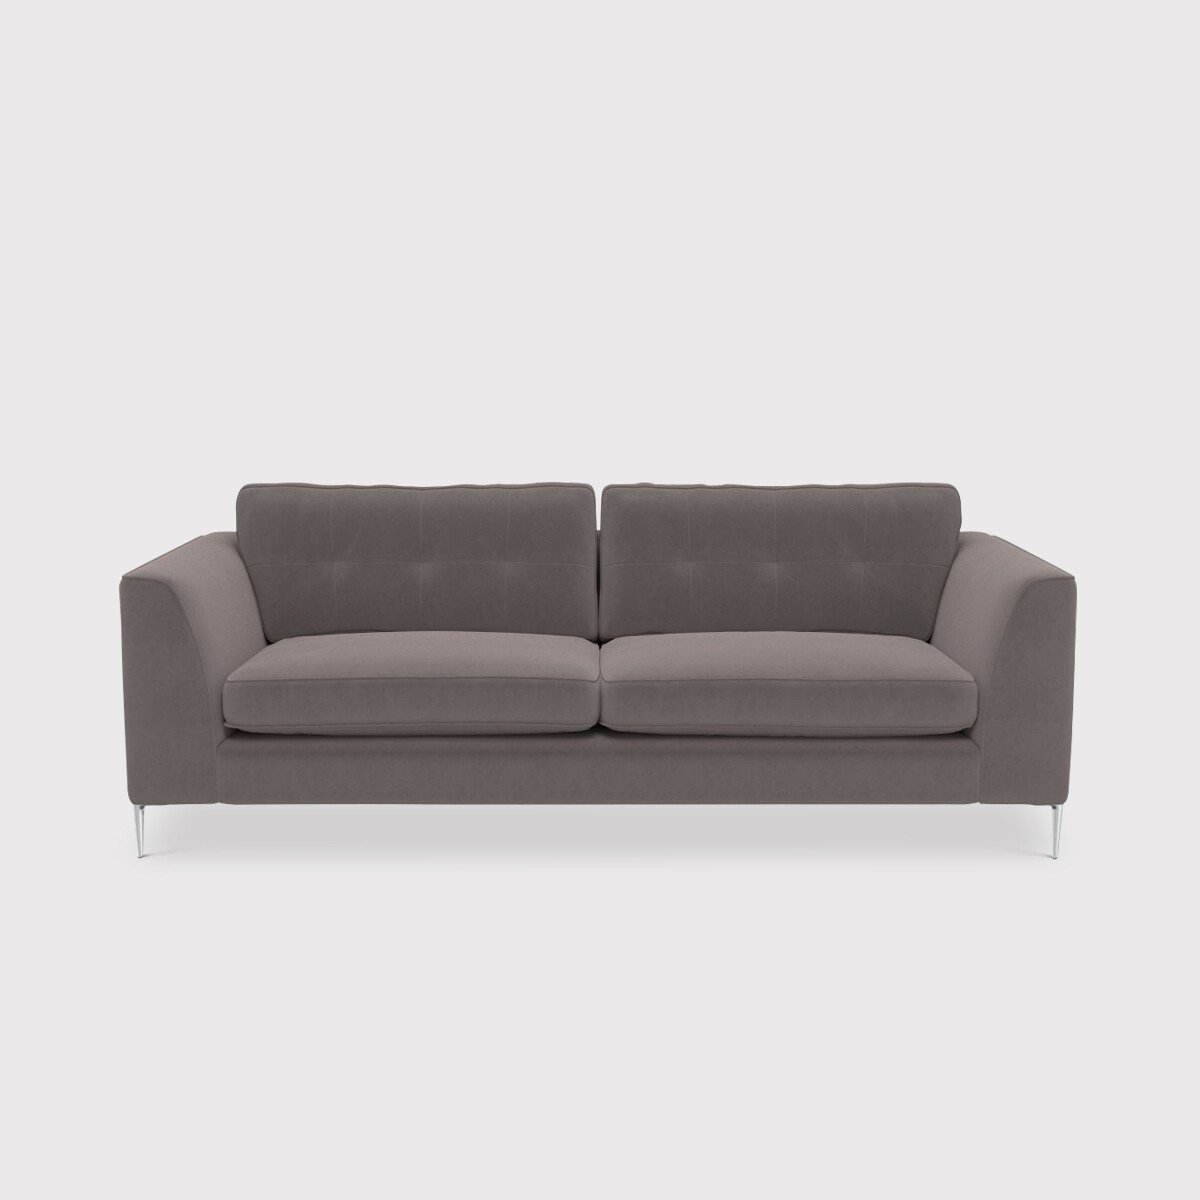 Conza Extra Large Sofa, Grey Fabric | Barker & Stonehouse